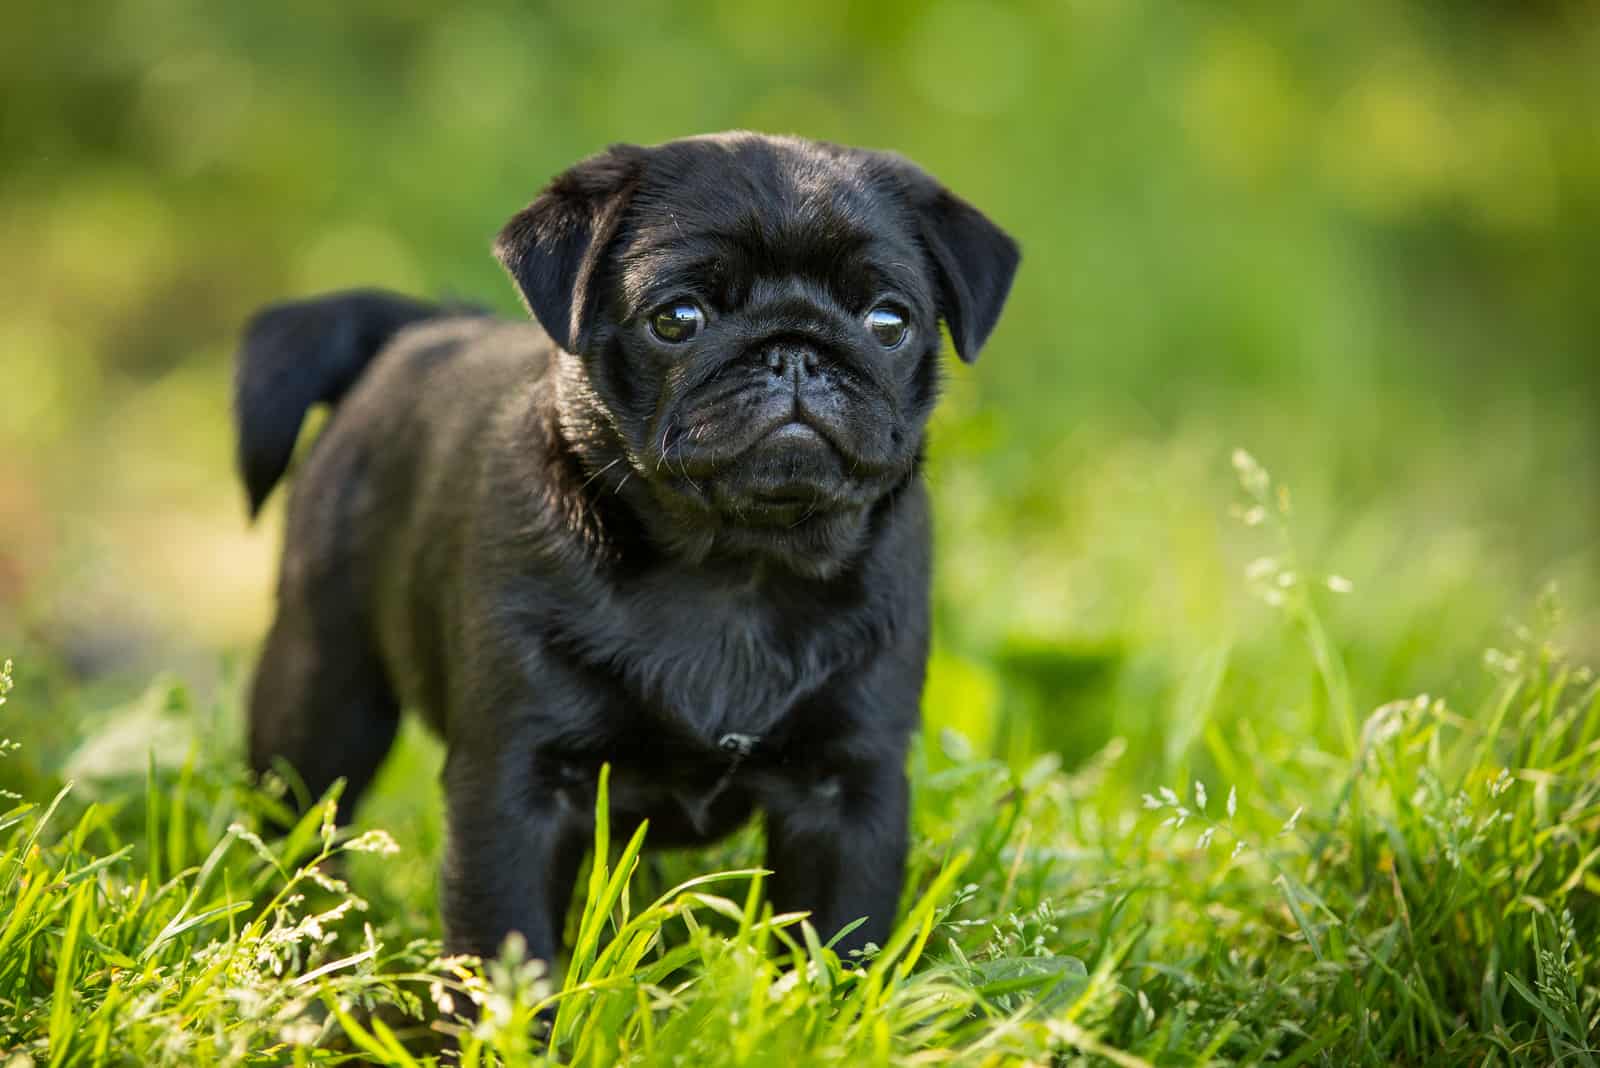 Black pug puppy walking on the grass in summer